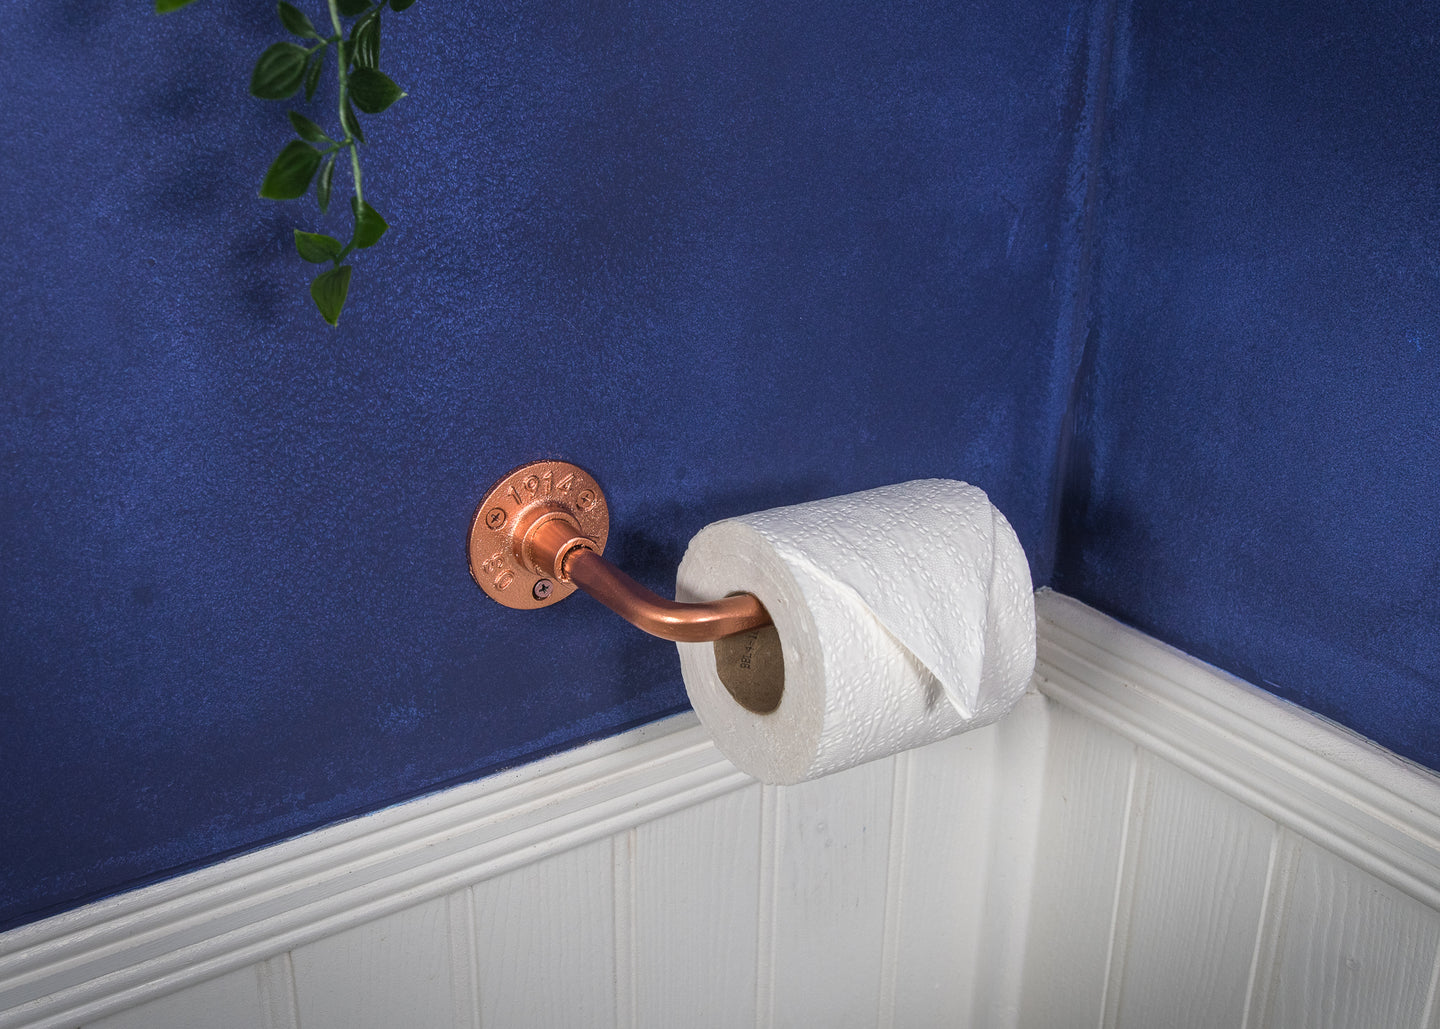 Copper Industrial toilet roll holder